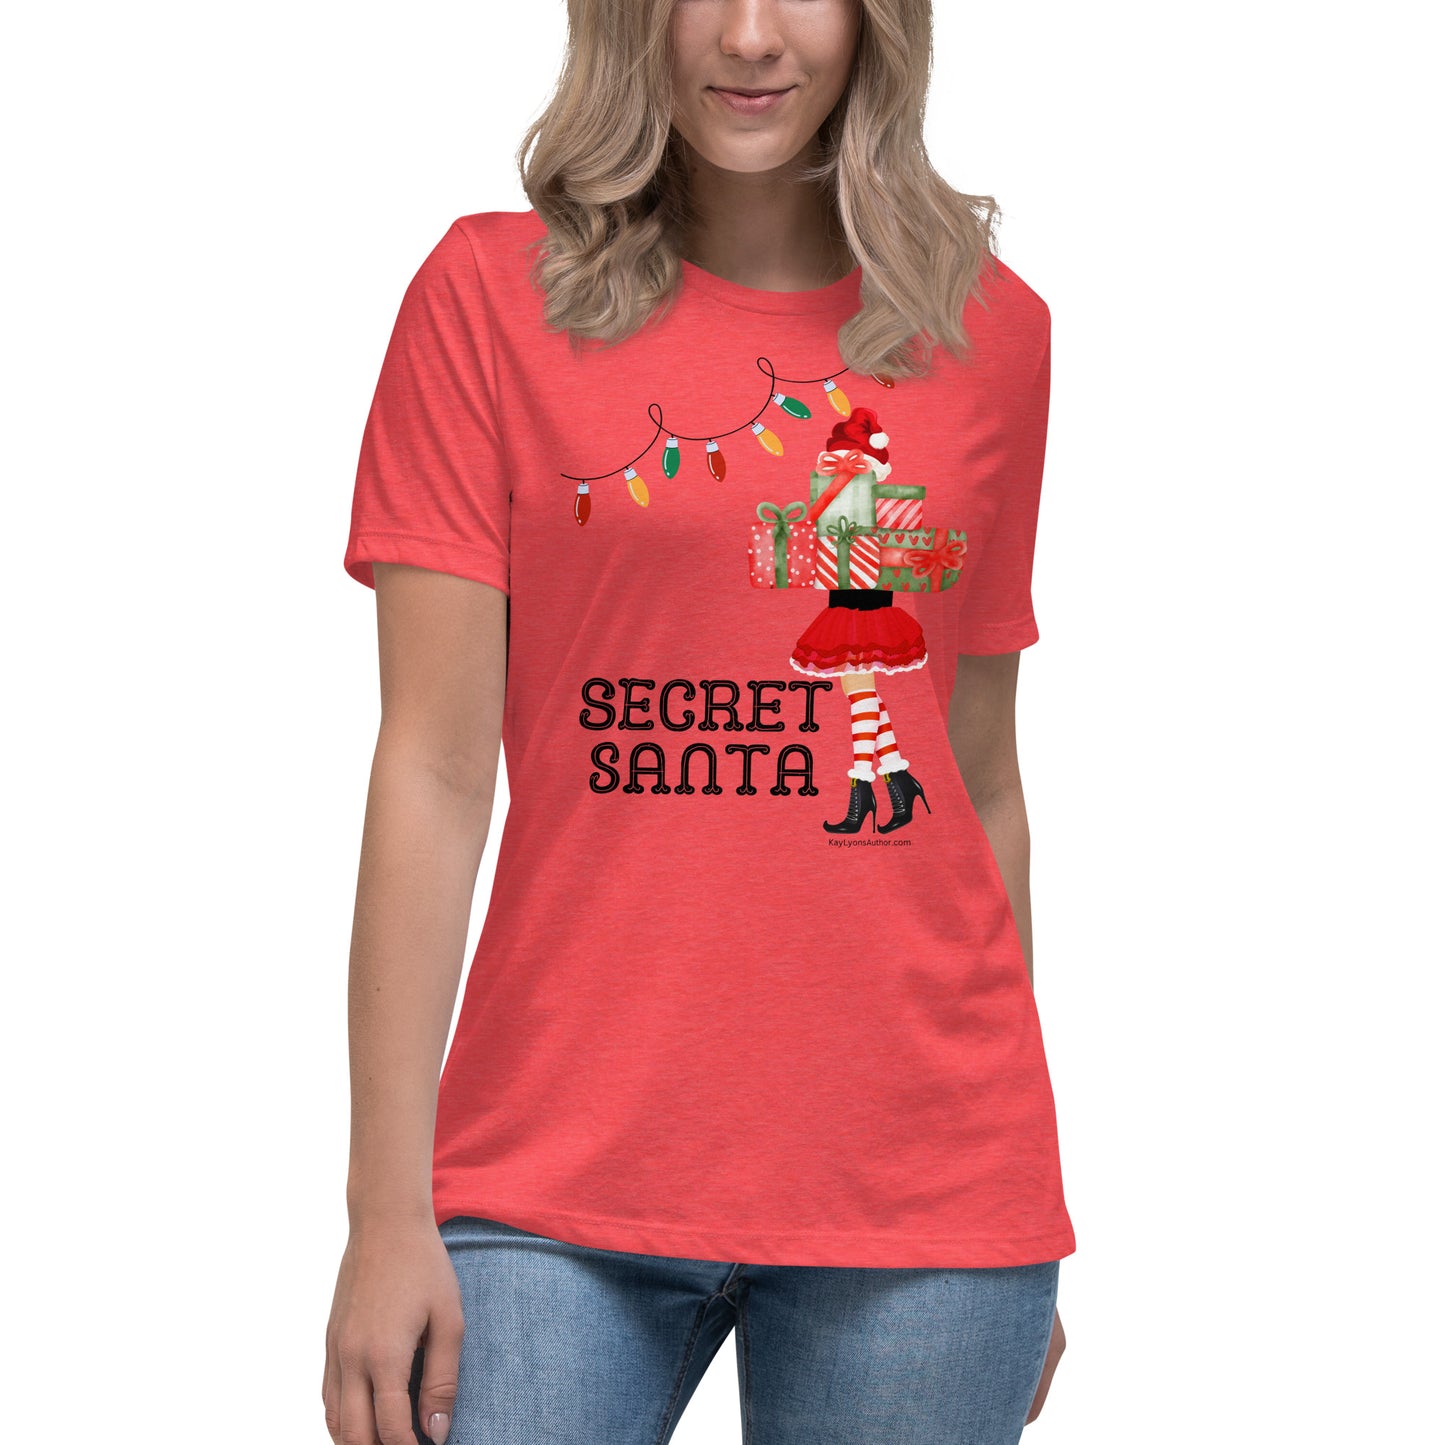 Women's Relaxed T-Shirt-FEATURING SECRET SANTA FROM THE SECRET SANTA SERIES